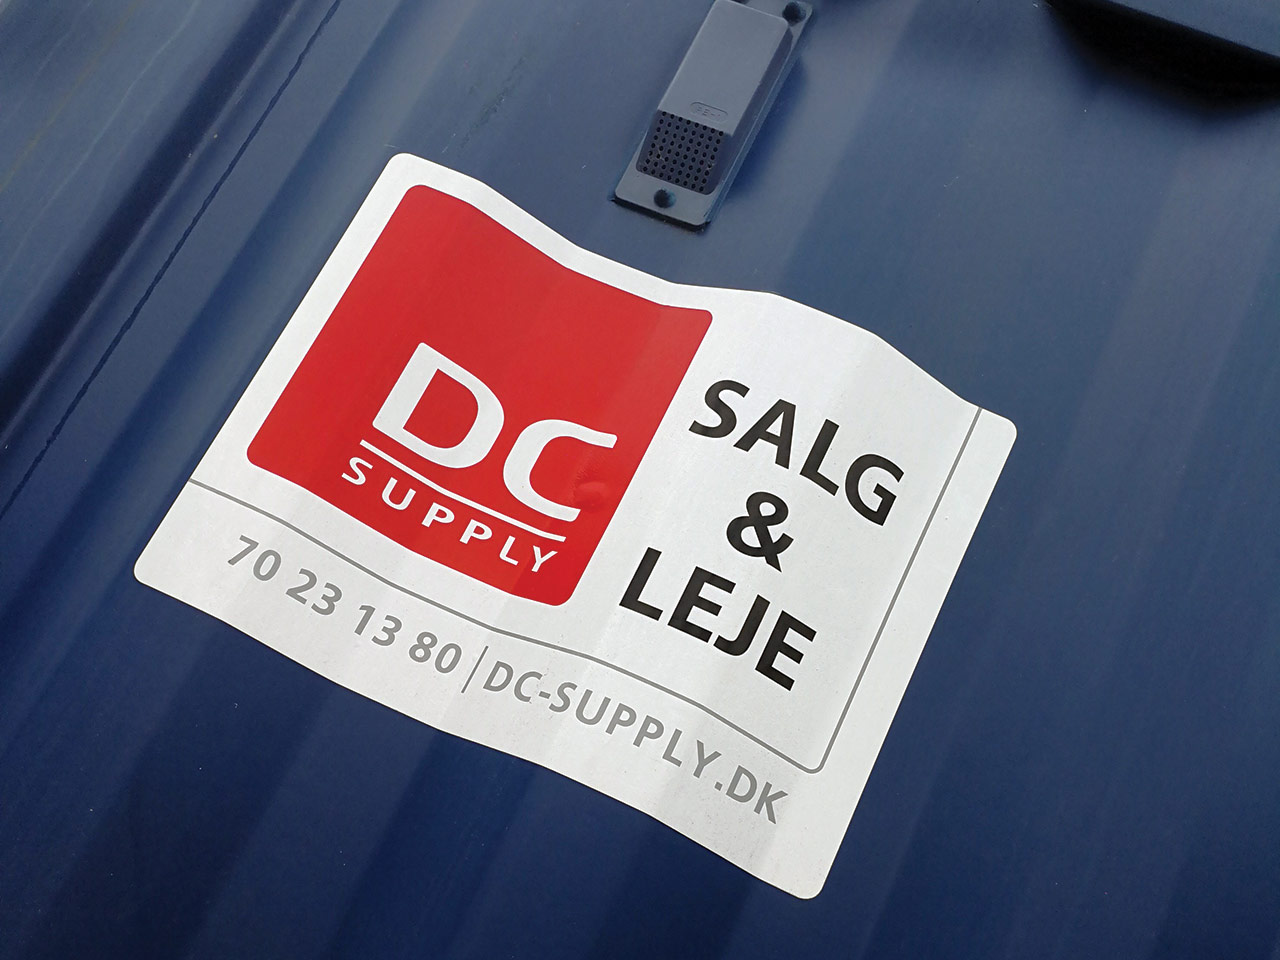 DC-Supply A/S - Salg & leje af containere +45 70231380